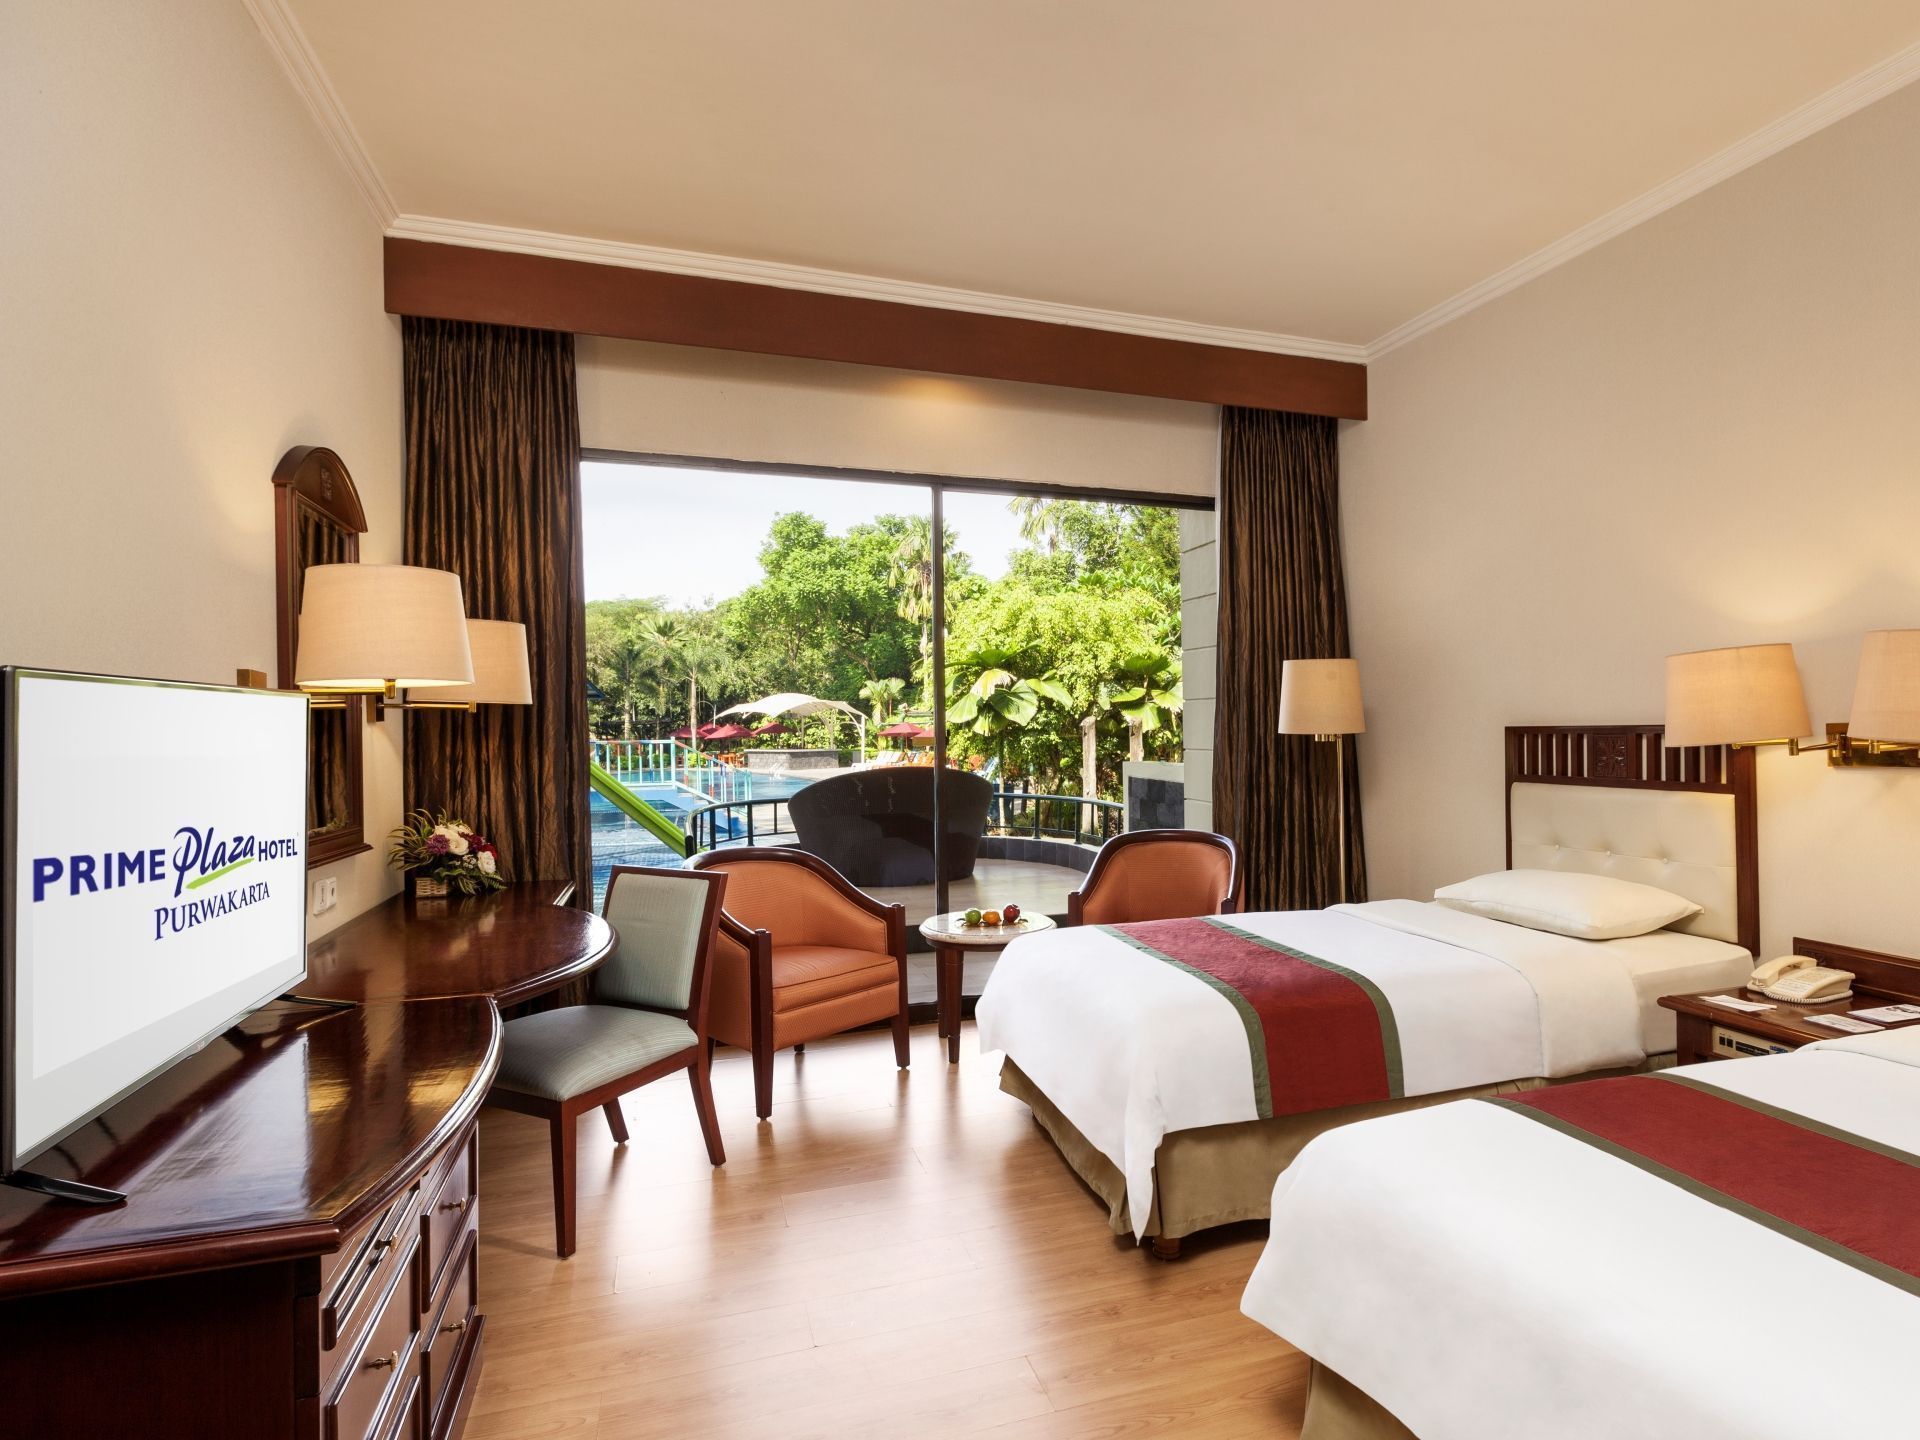 A-HOTEL.com - Prime Plaza Hotel Purwakarta, Hotel, Cikampek, Indonesia -  price, booking, contact